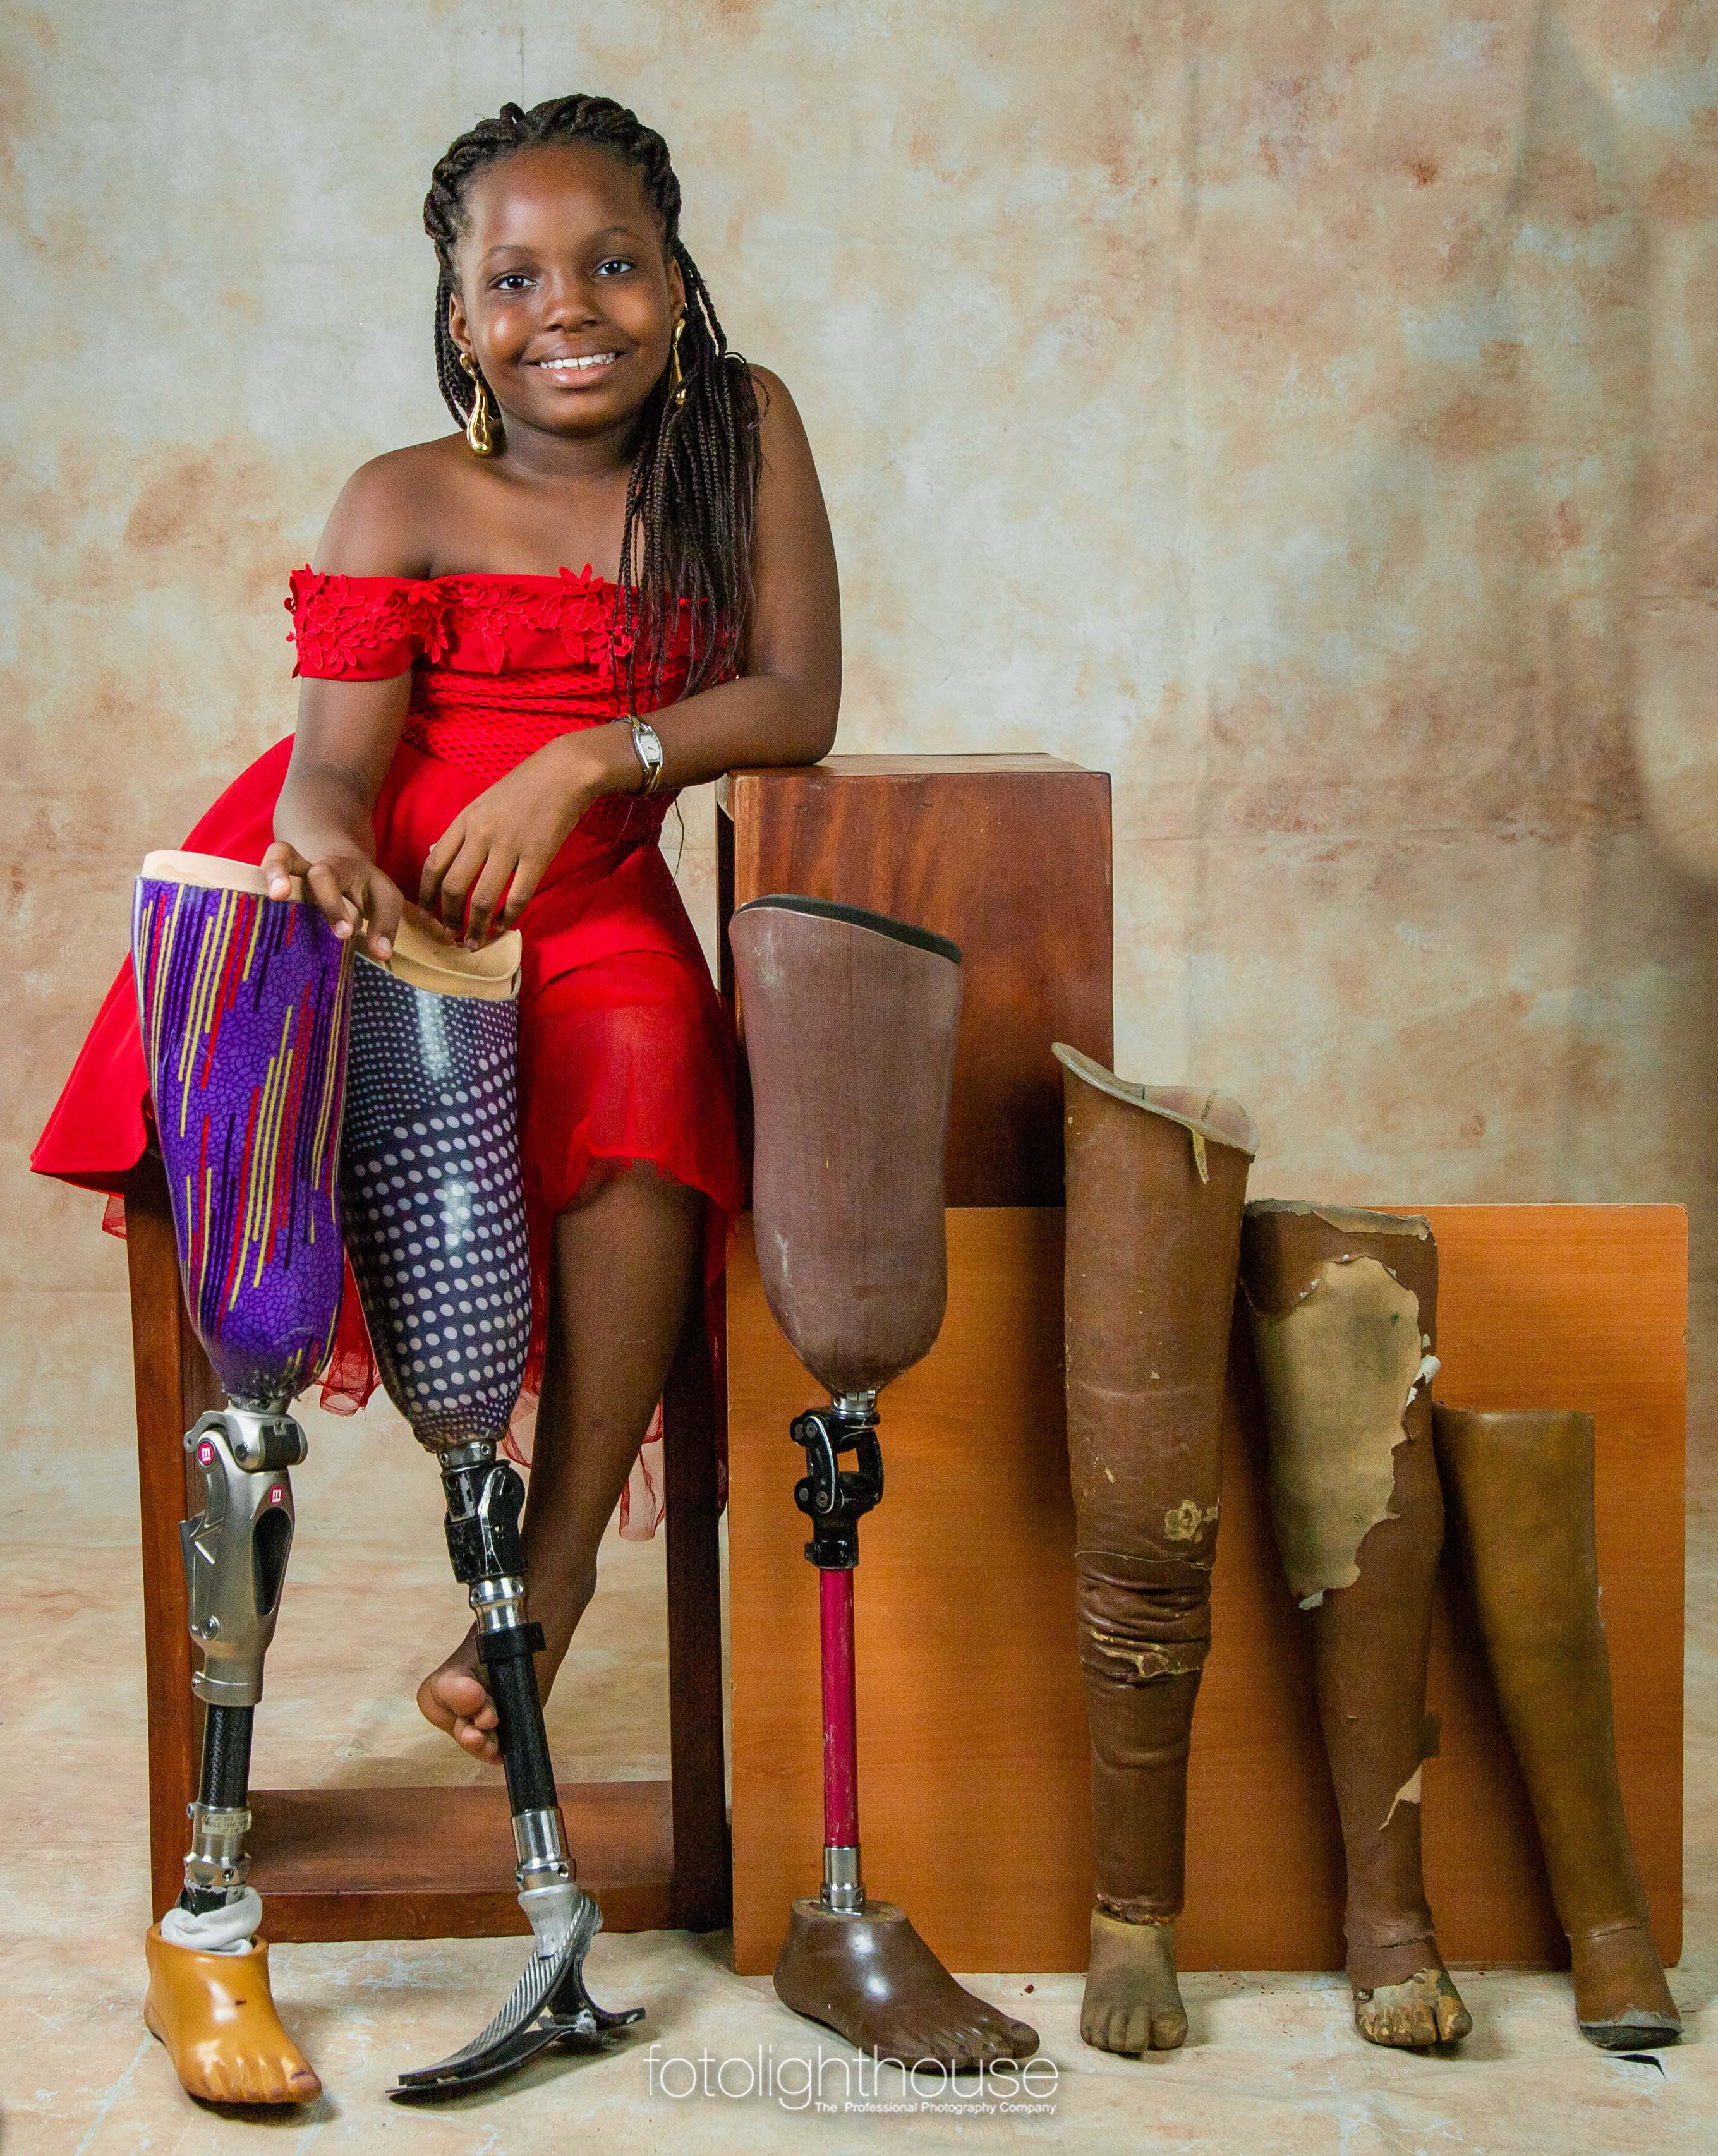 Meet Crystal Chigbu the woman who helps disabled children walk again (Photos)